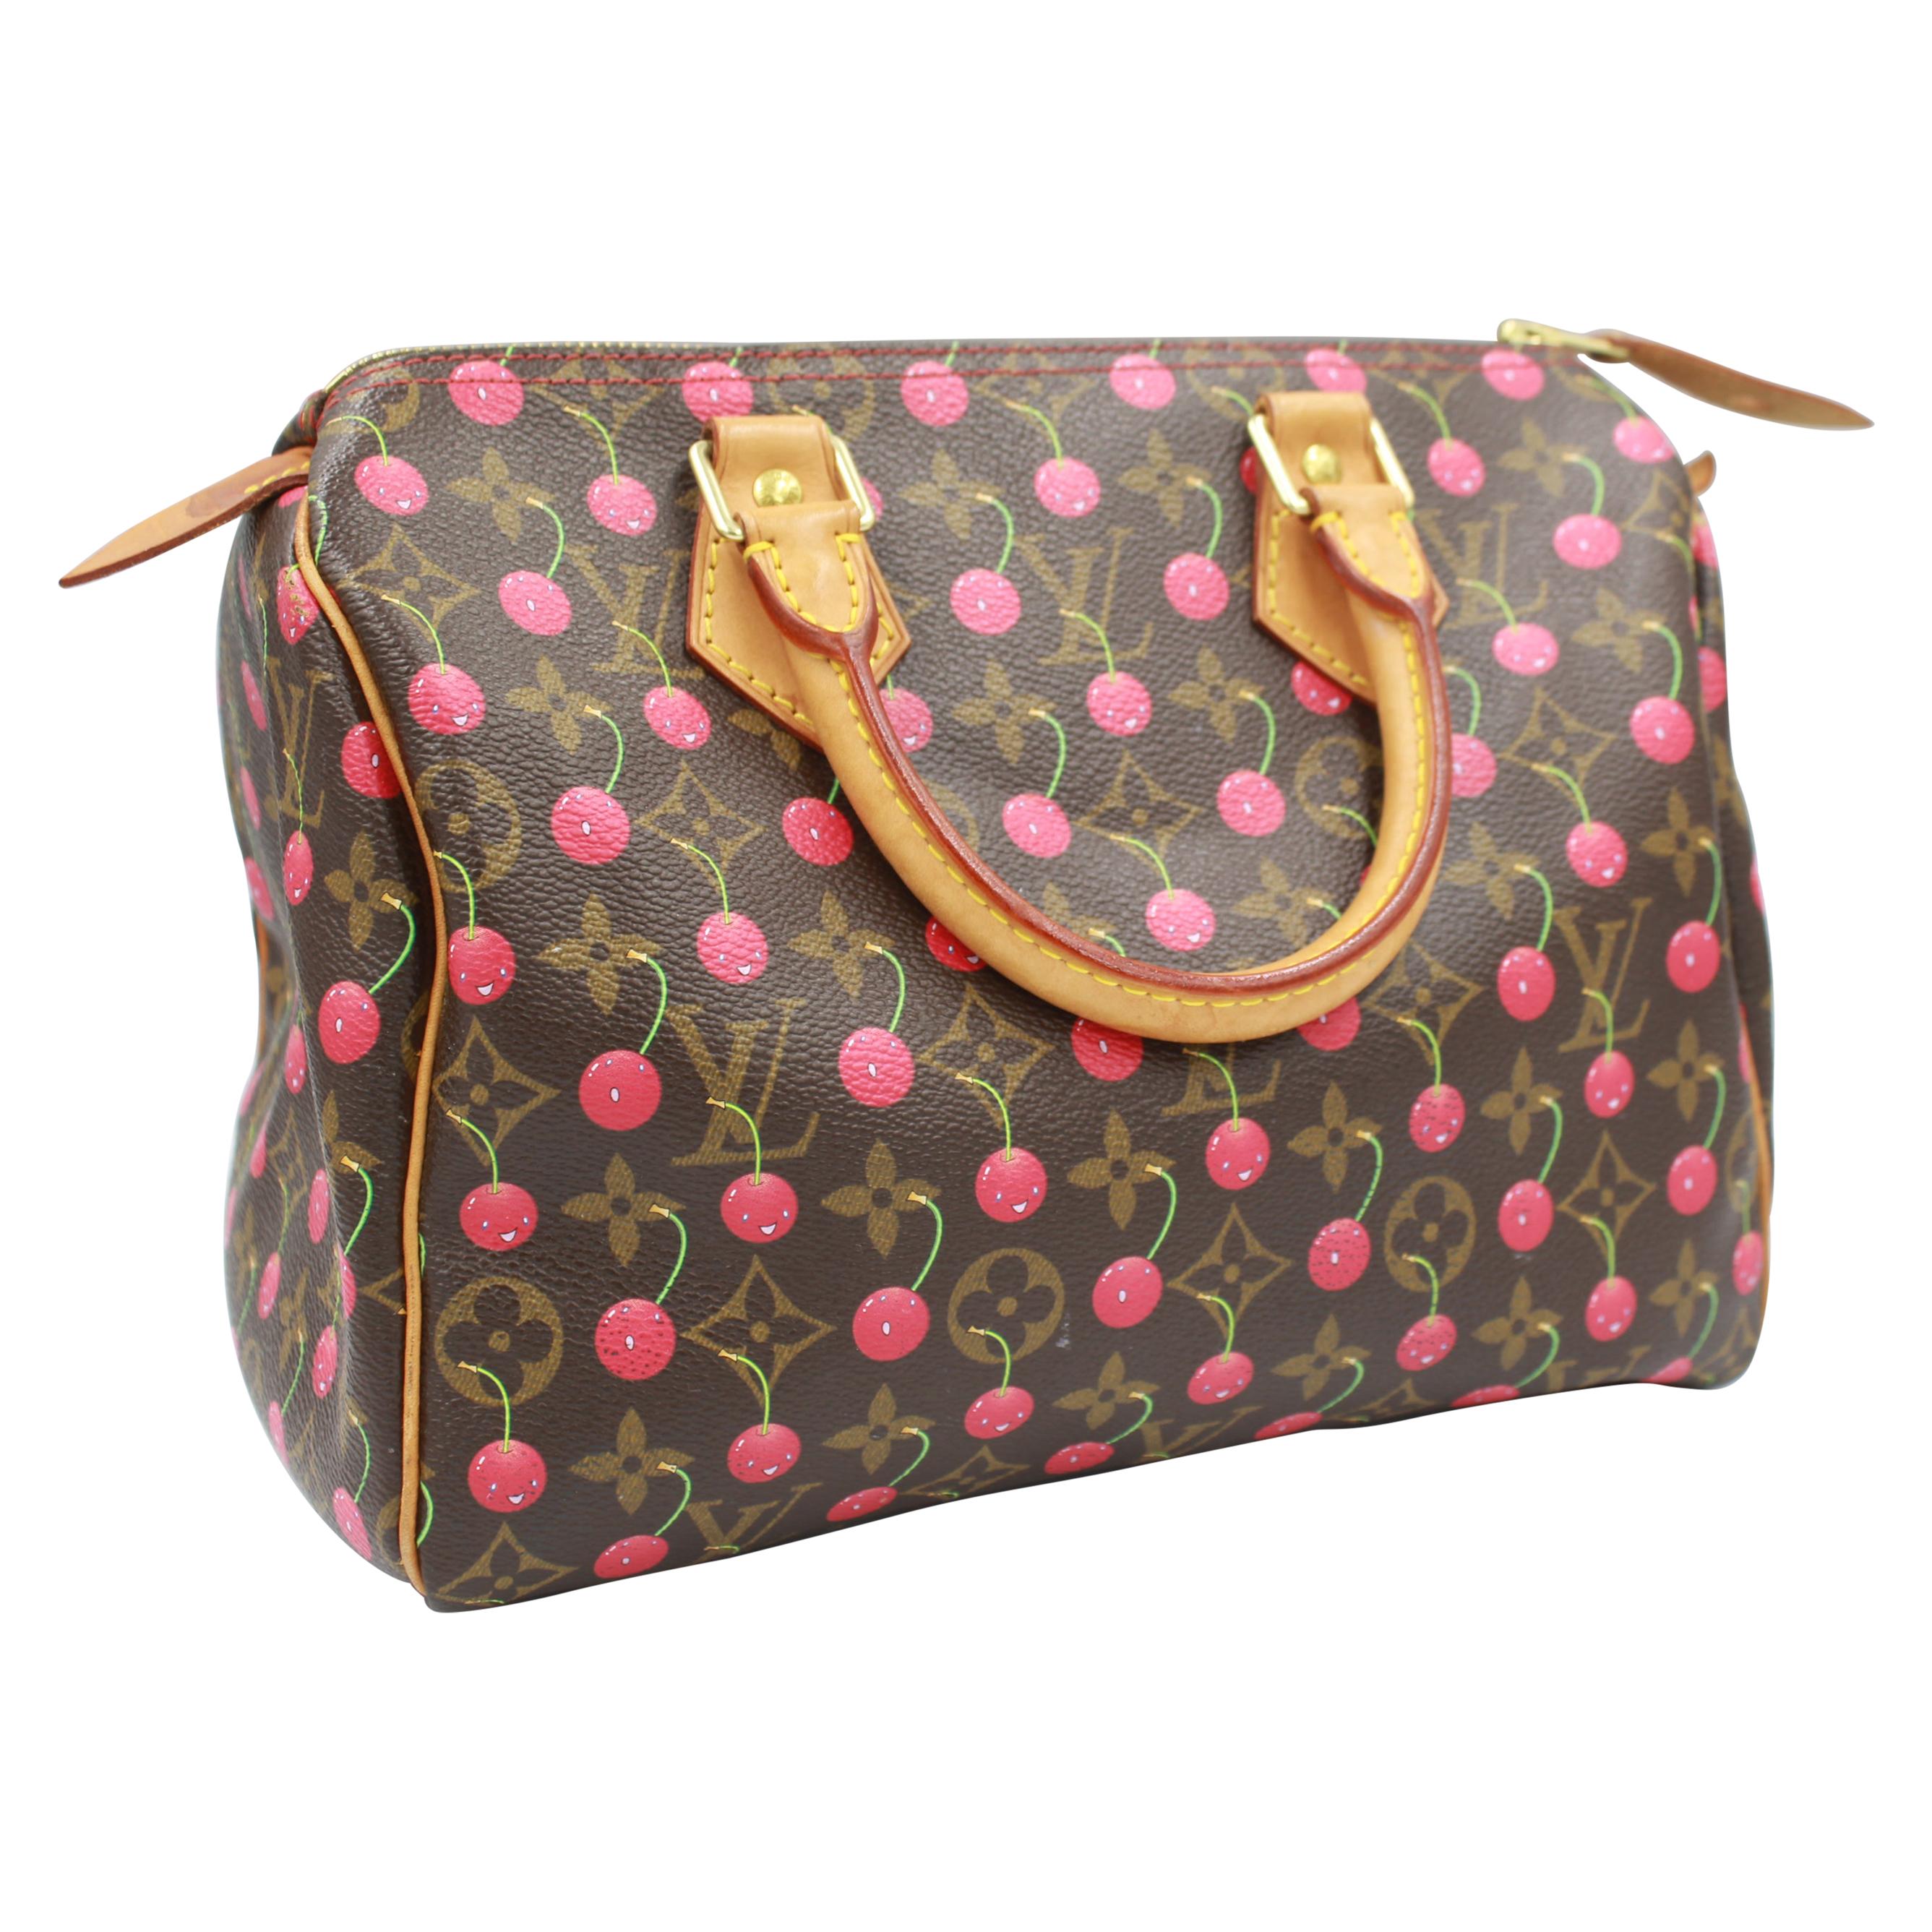 Louis Vuitton Speedy 25 handbag with cherries, by haruki Murakami For Sale